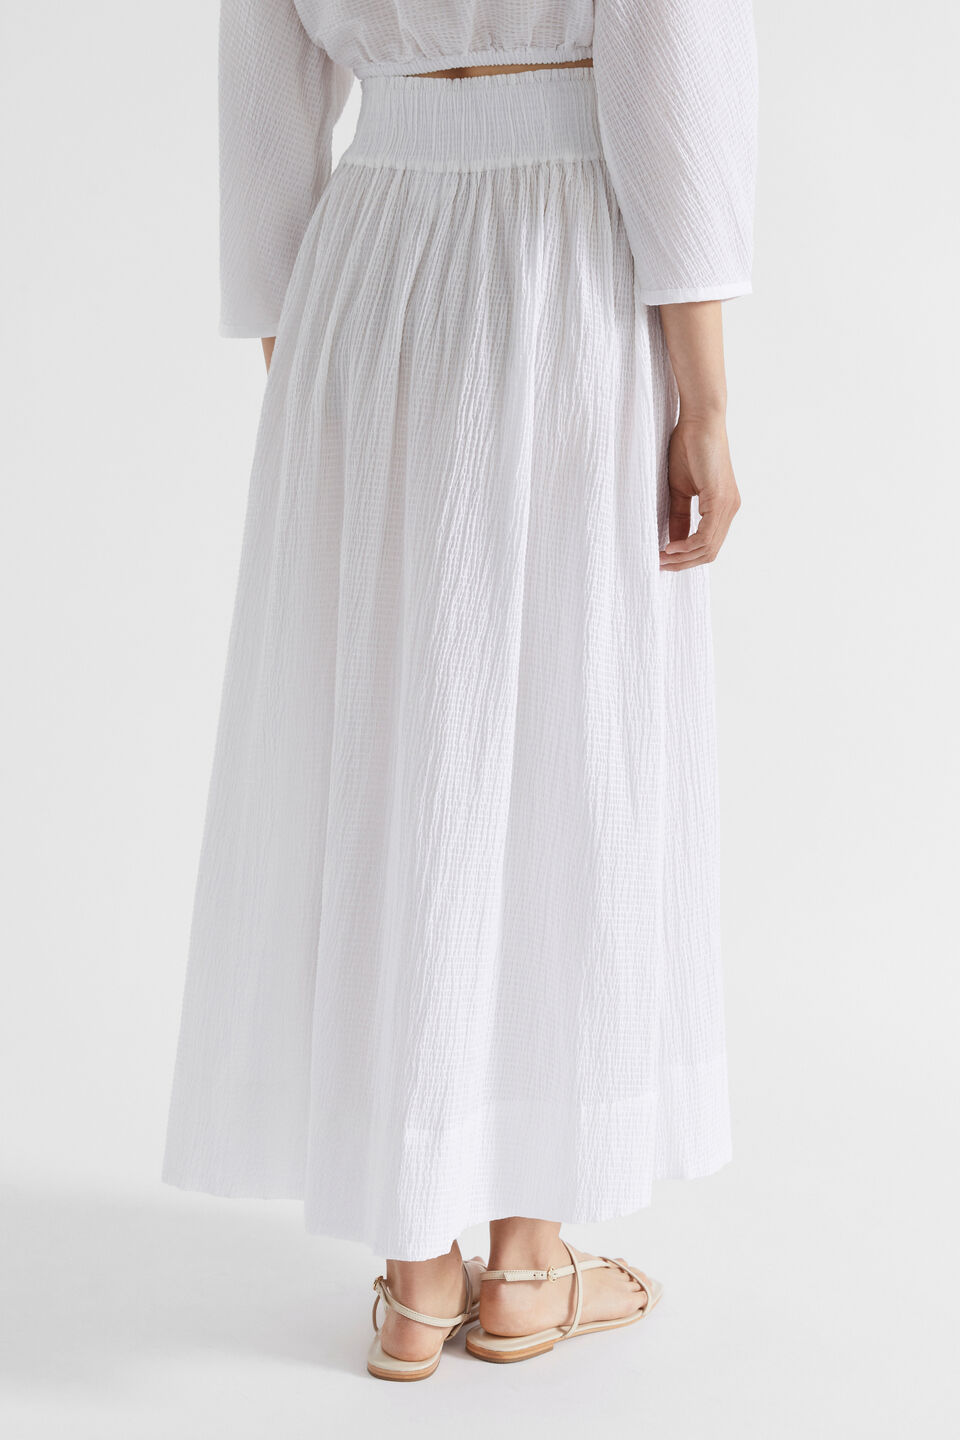 Textured Cotton Skirt  Whisper White